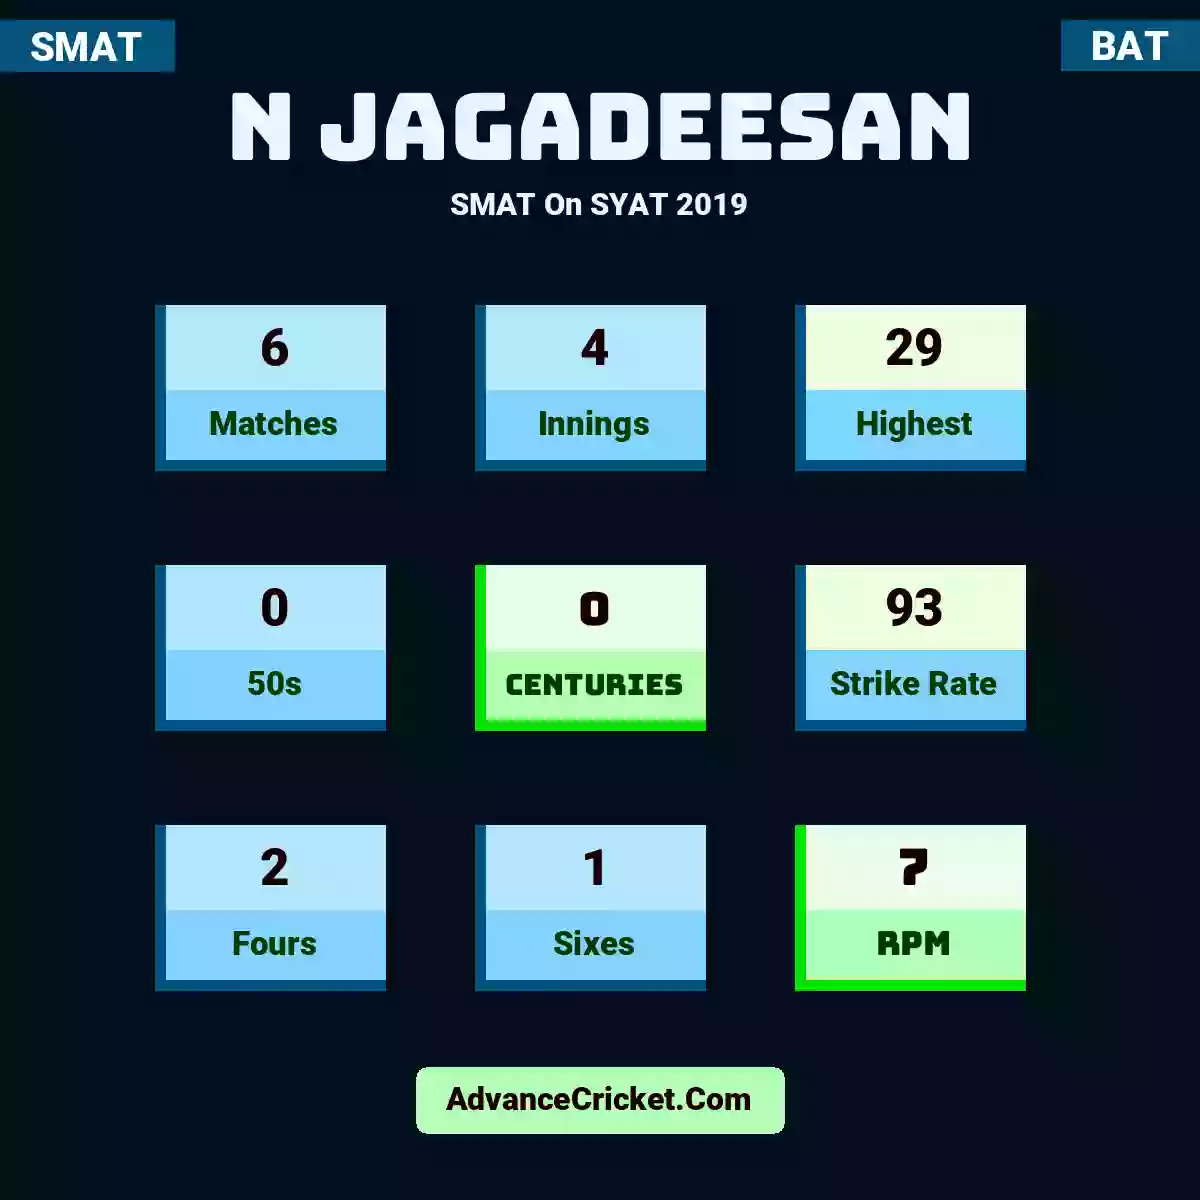 N Jagadeesan SMAT  On SYAT 2019, N Jagadeesan played 6 matches, scored 29 runs as highest, 0 half-centuries, and 0 centuries, with a strike rate of 93. N.Jagadeesan hit 2 fours and 1 sixes, with an RPM of 7.